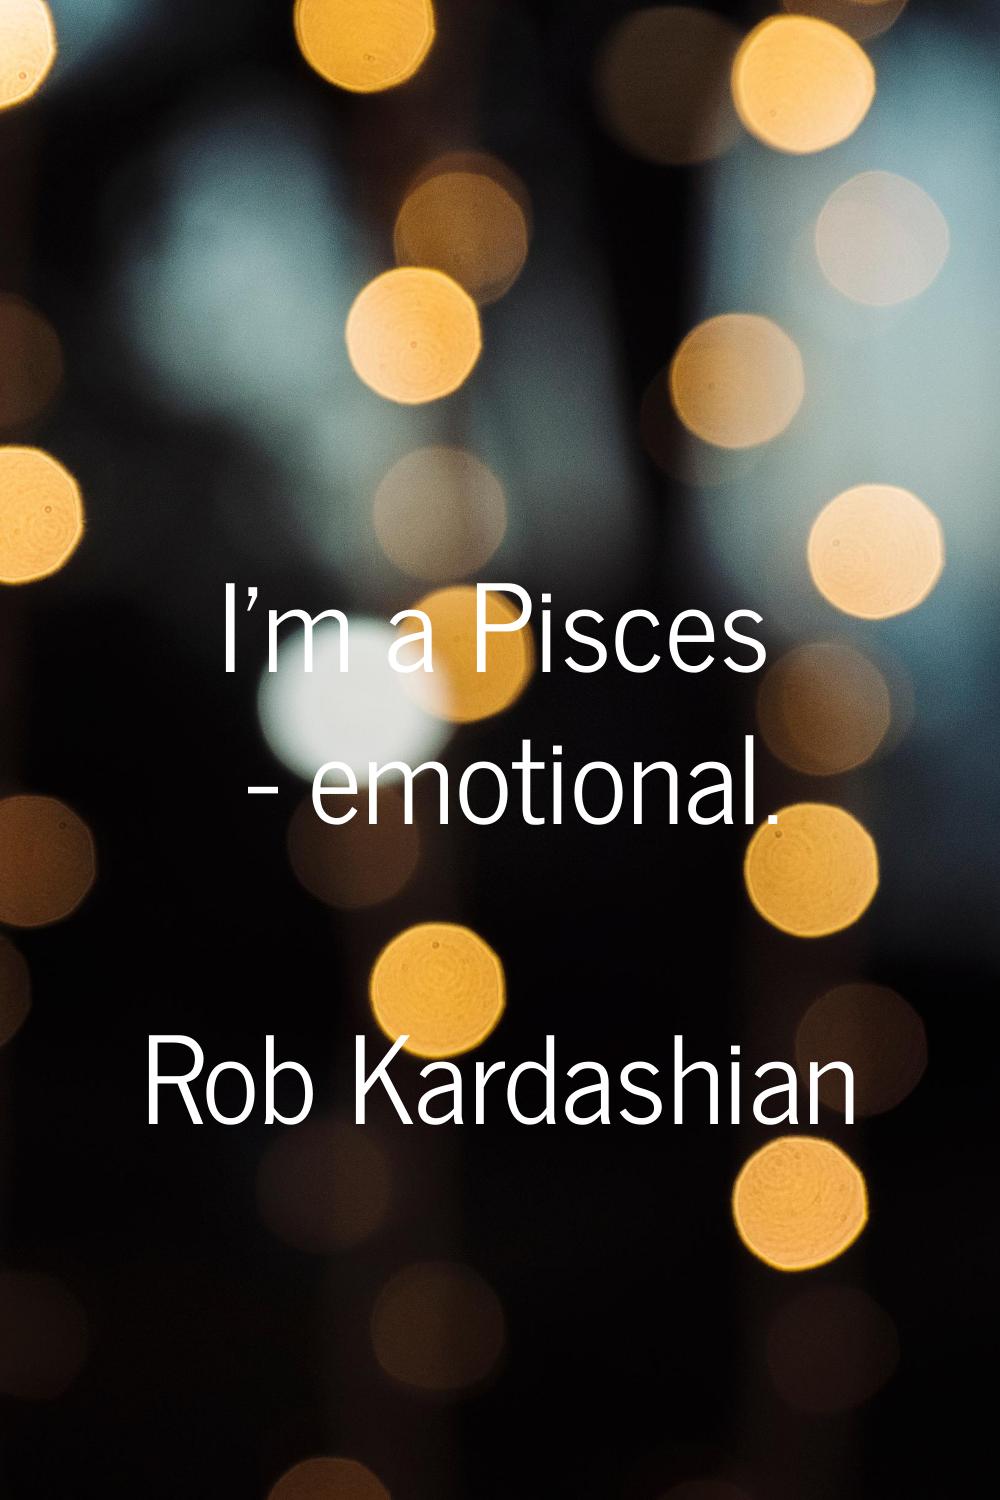 I'm a Pisces - emotional.